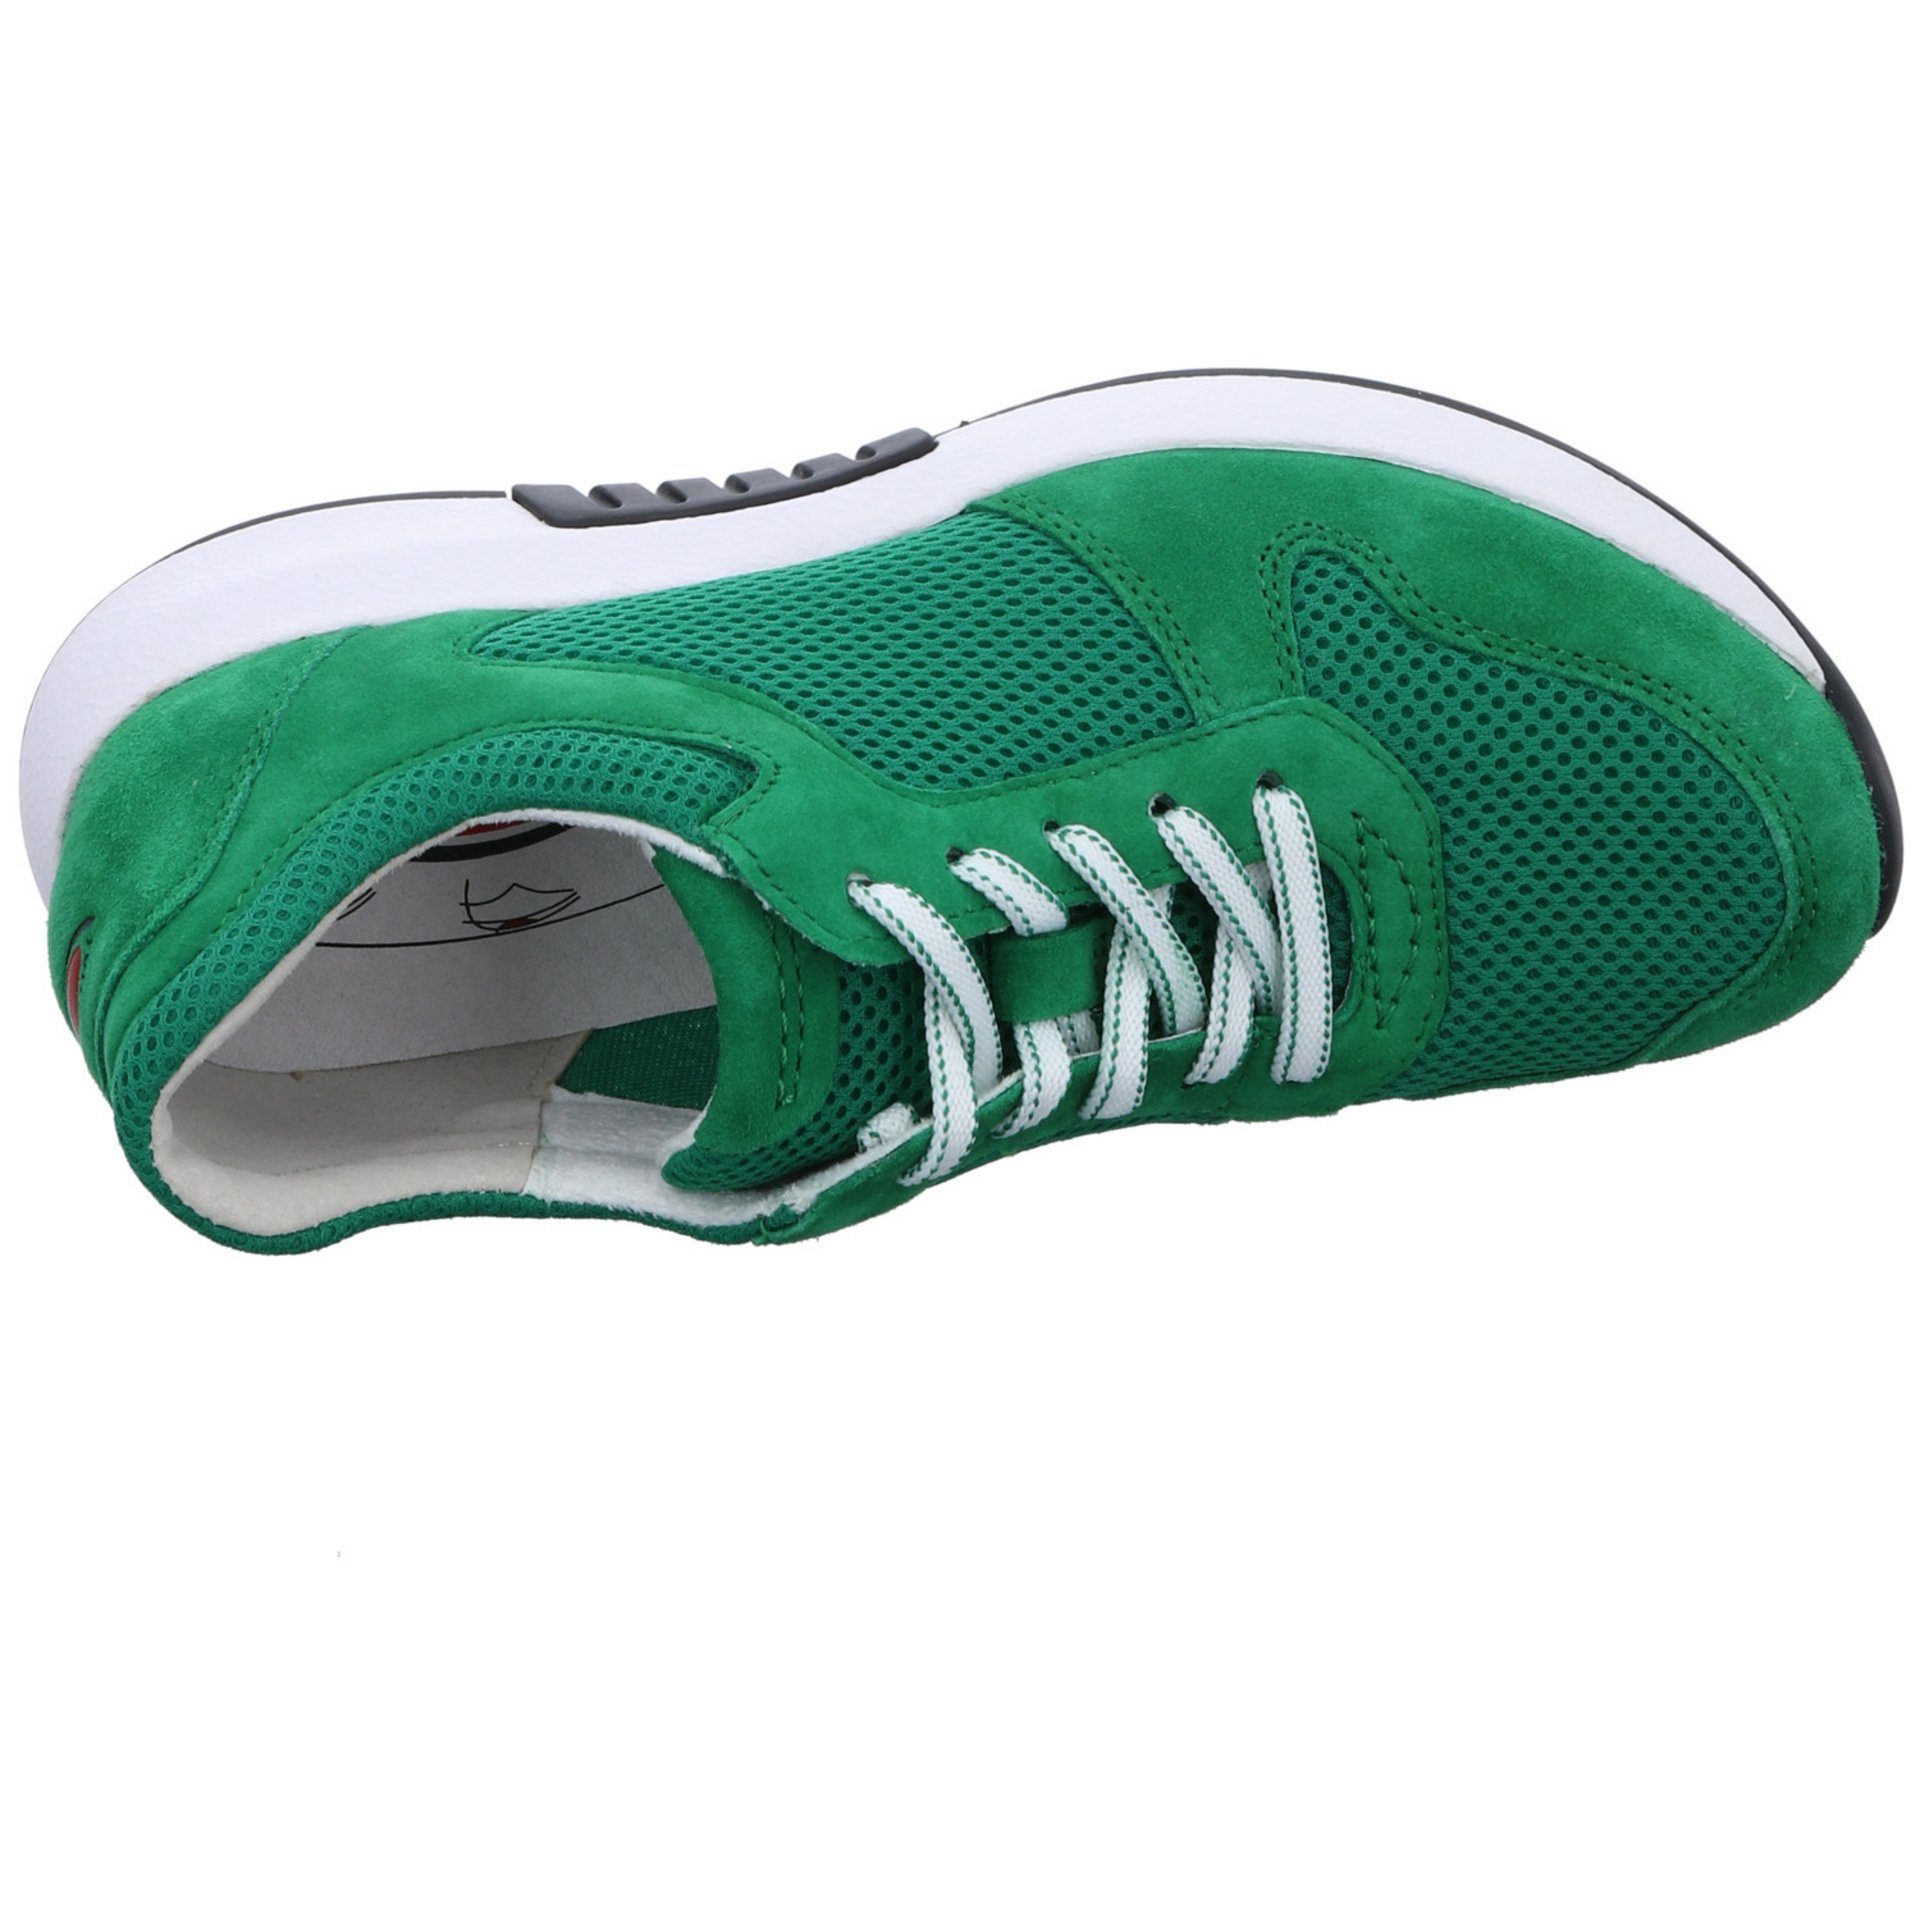 Gabor Schuhe Rollingsoft Lederkombination verde Schnürschuh Sneaker Schnürschuh Damen